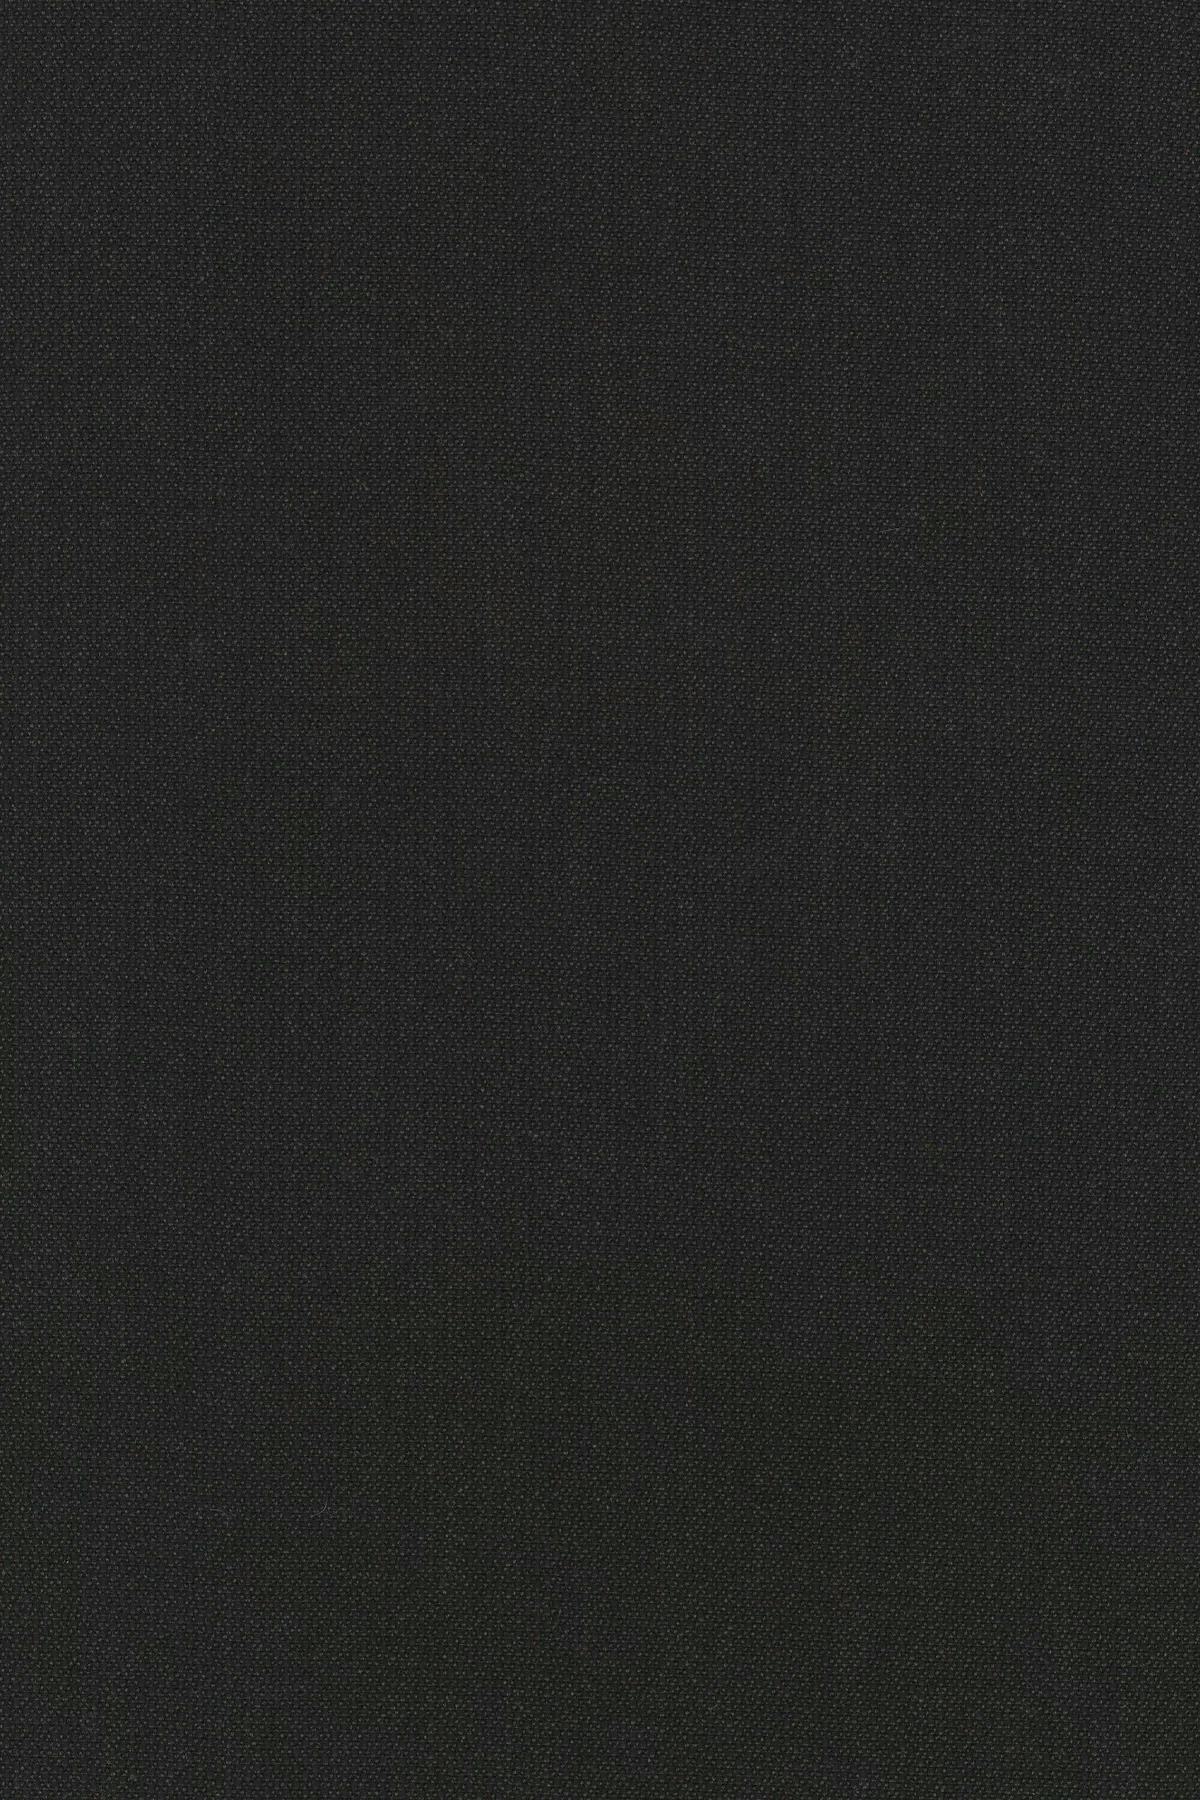 Fabric sample Fiord black